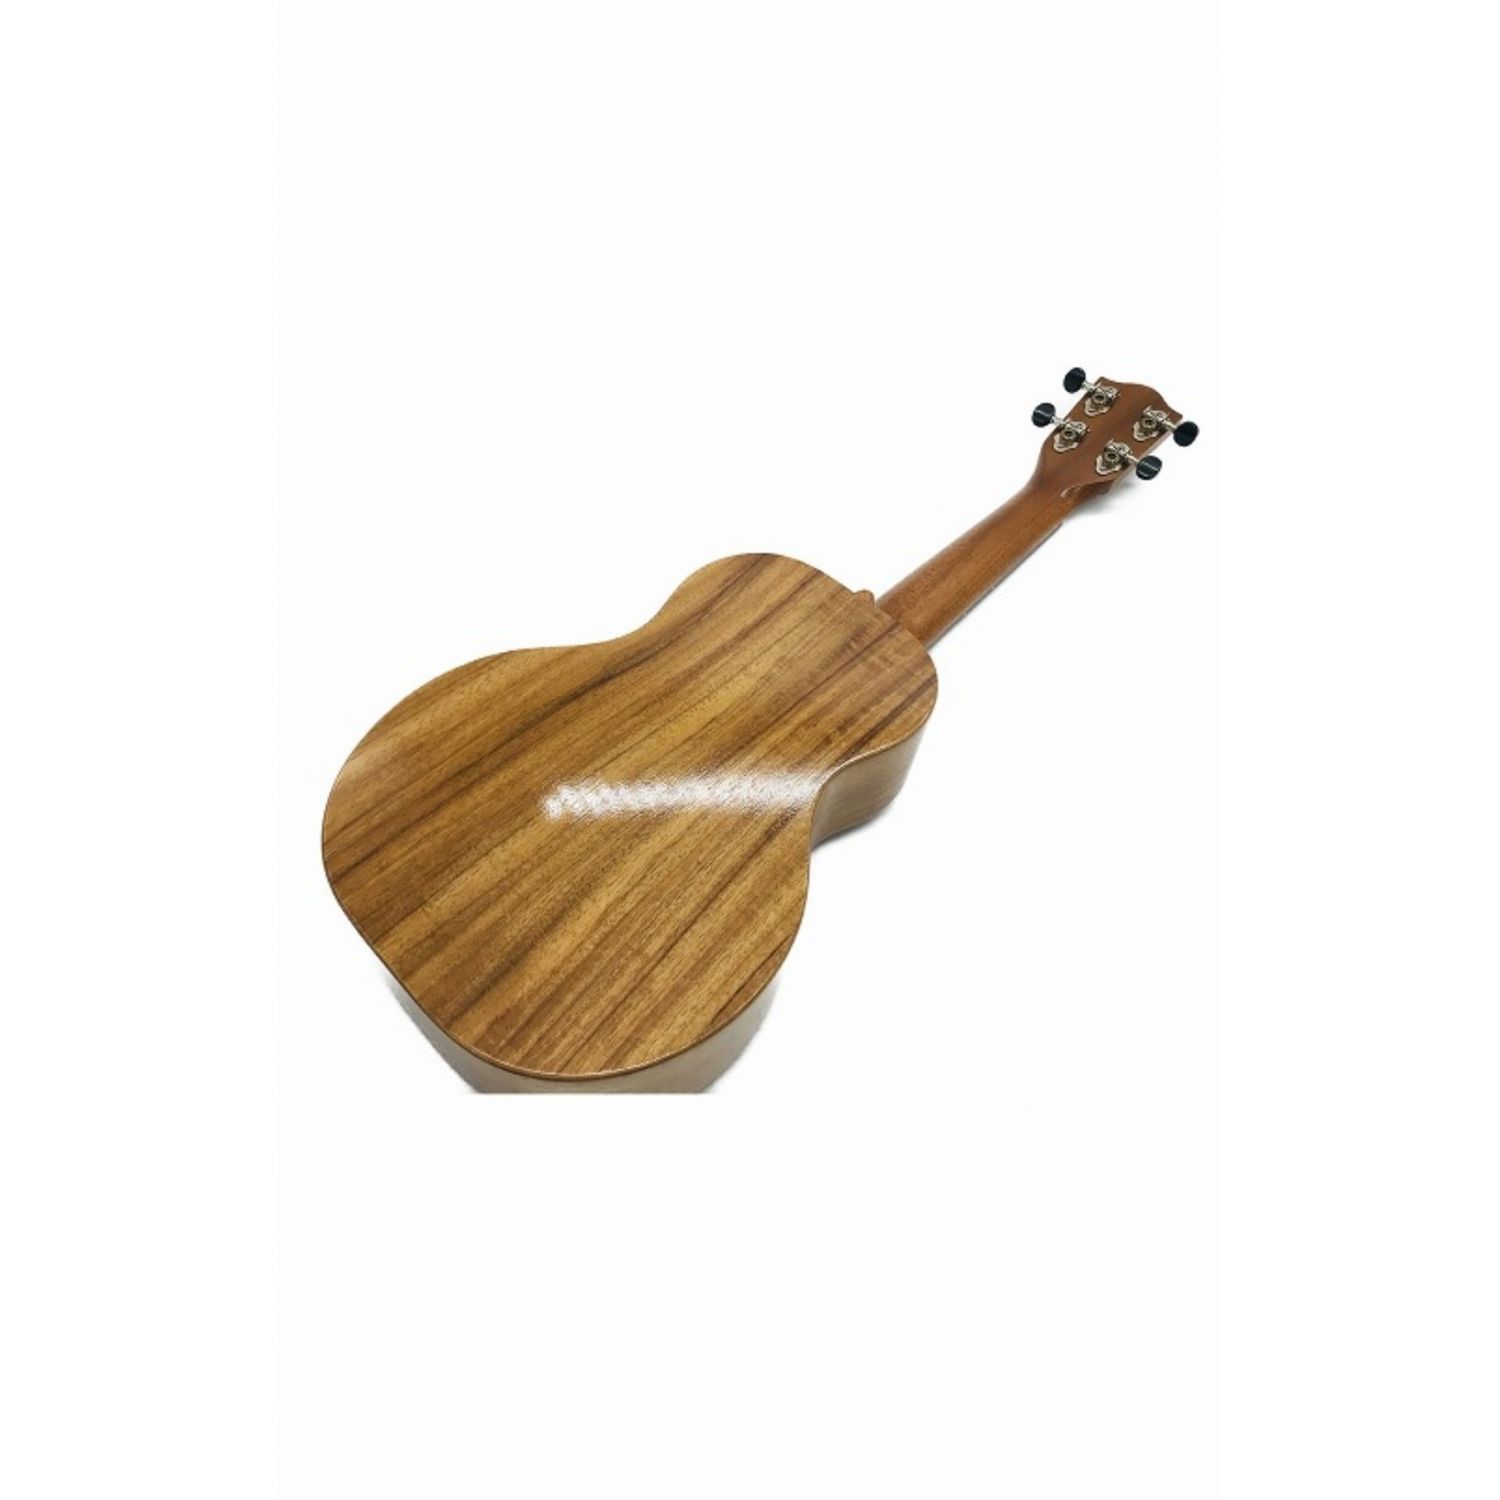 KAALA (カアラ) ウクレレ KU5C 世界で一番幸せになれる楽器を国産で 